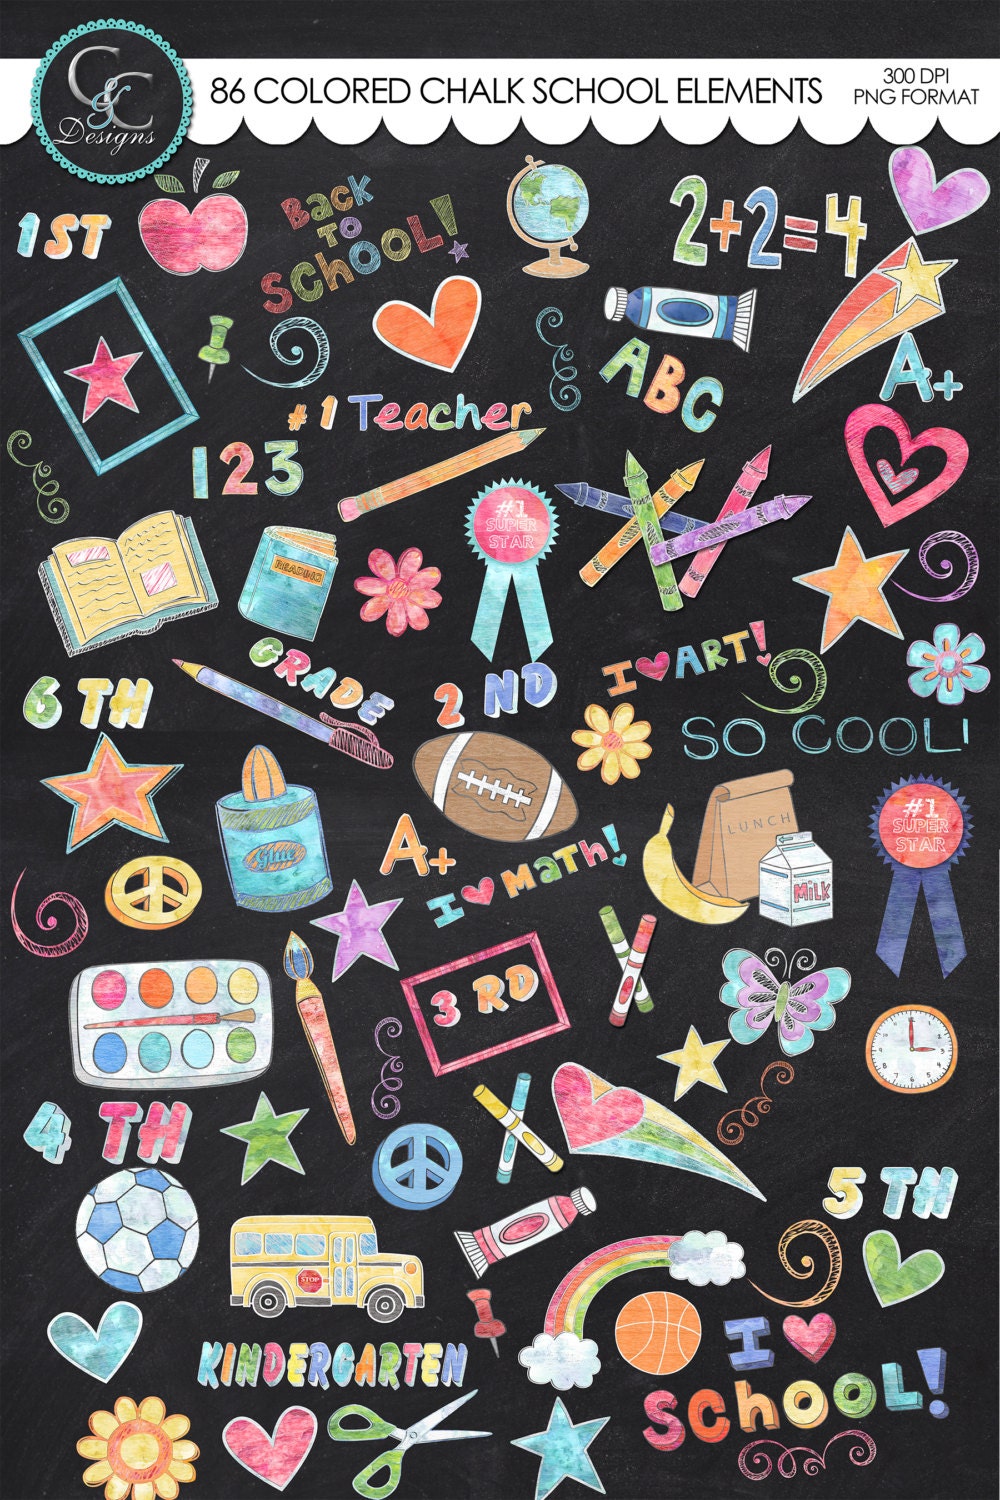 155 Colored Chalk School Elements/clipart Instant Download 